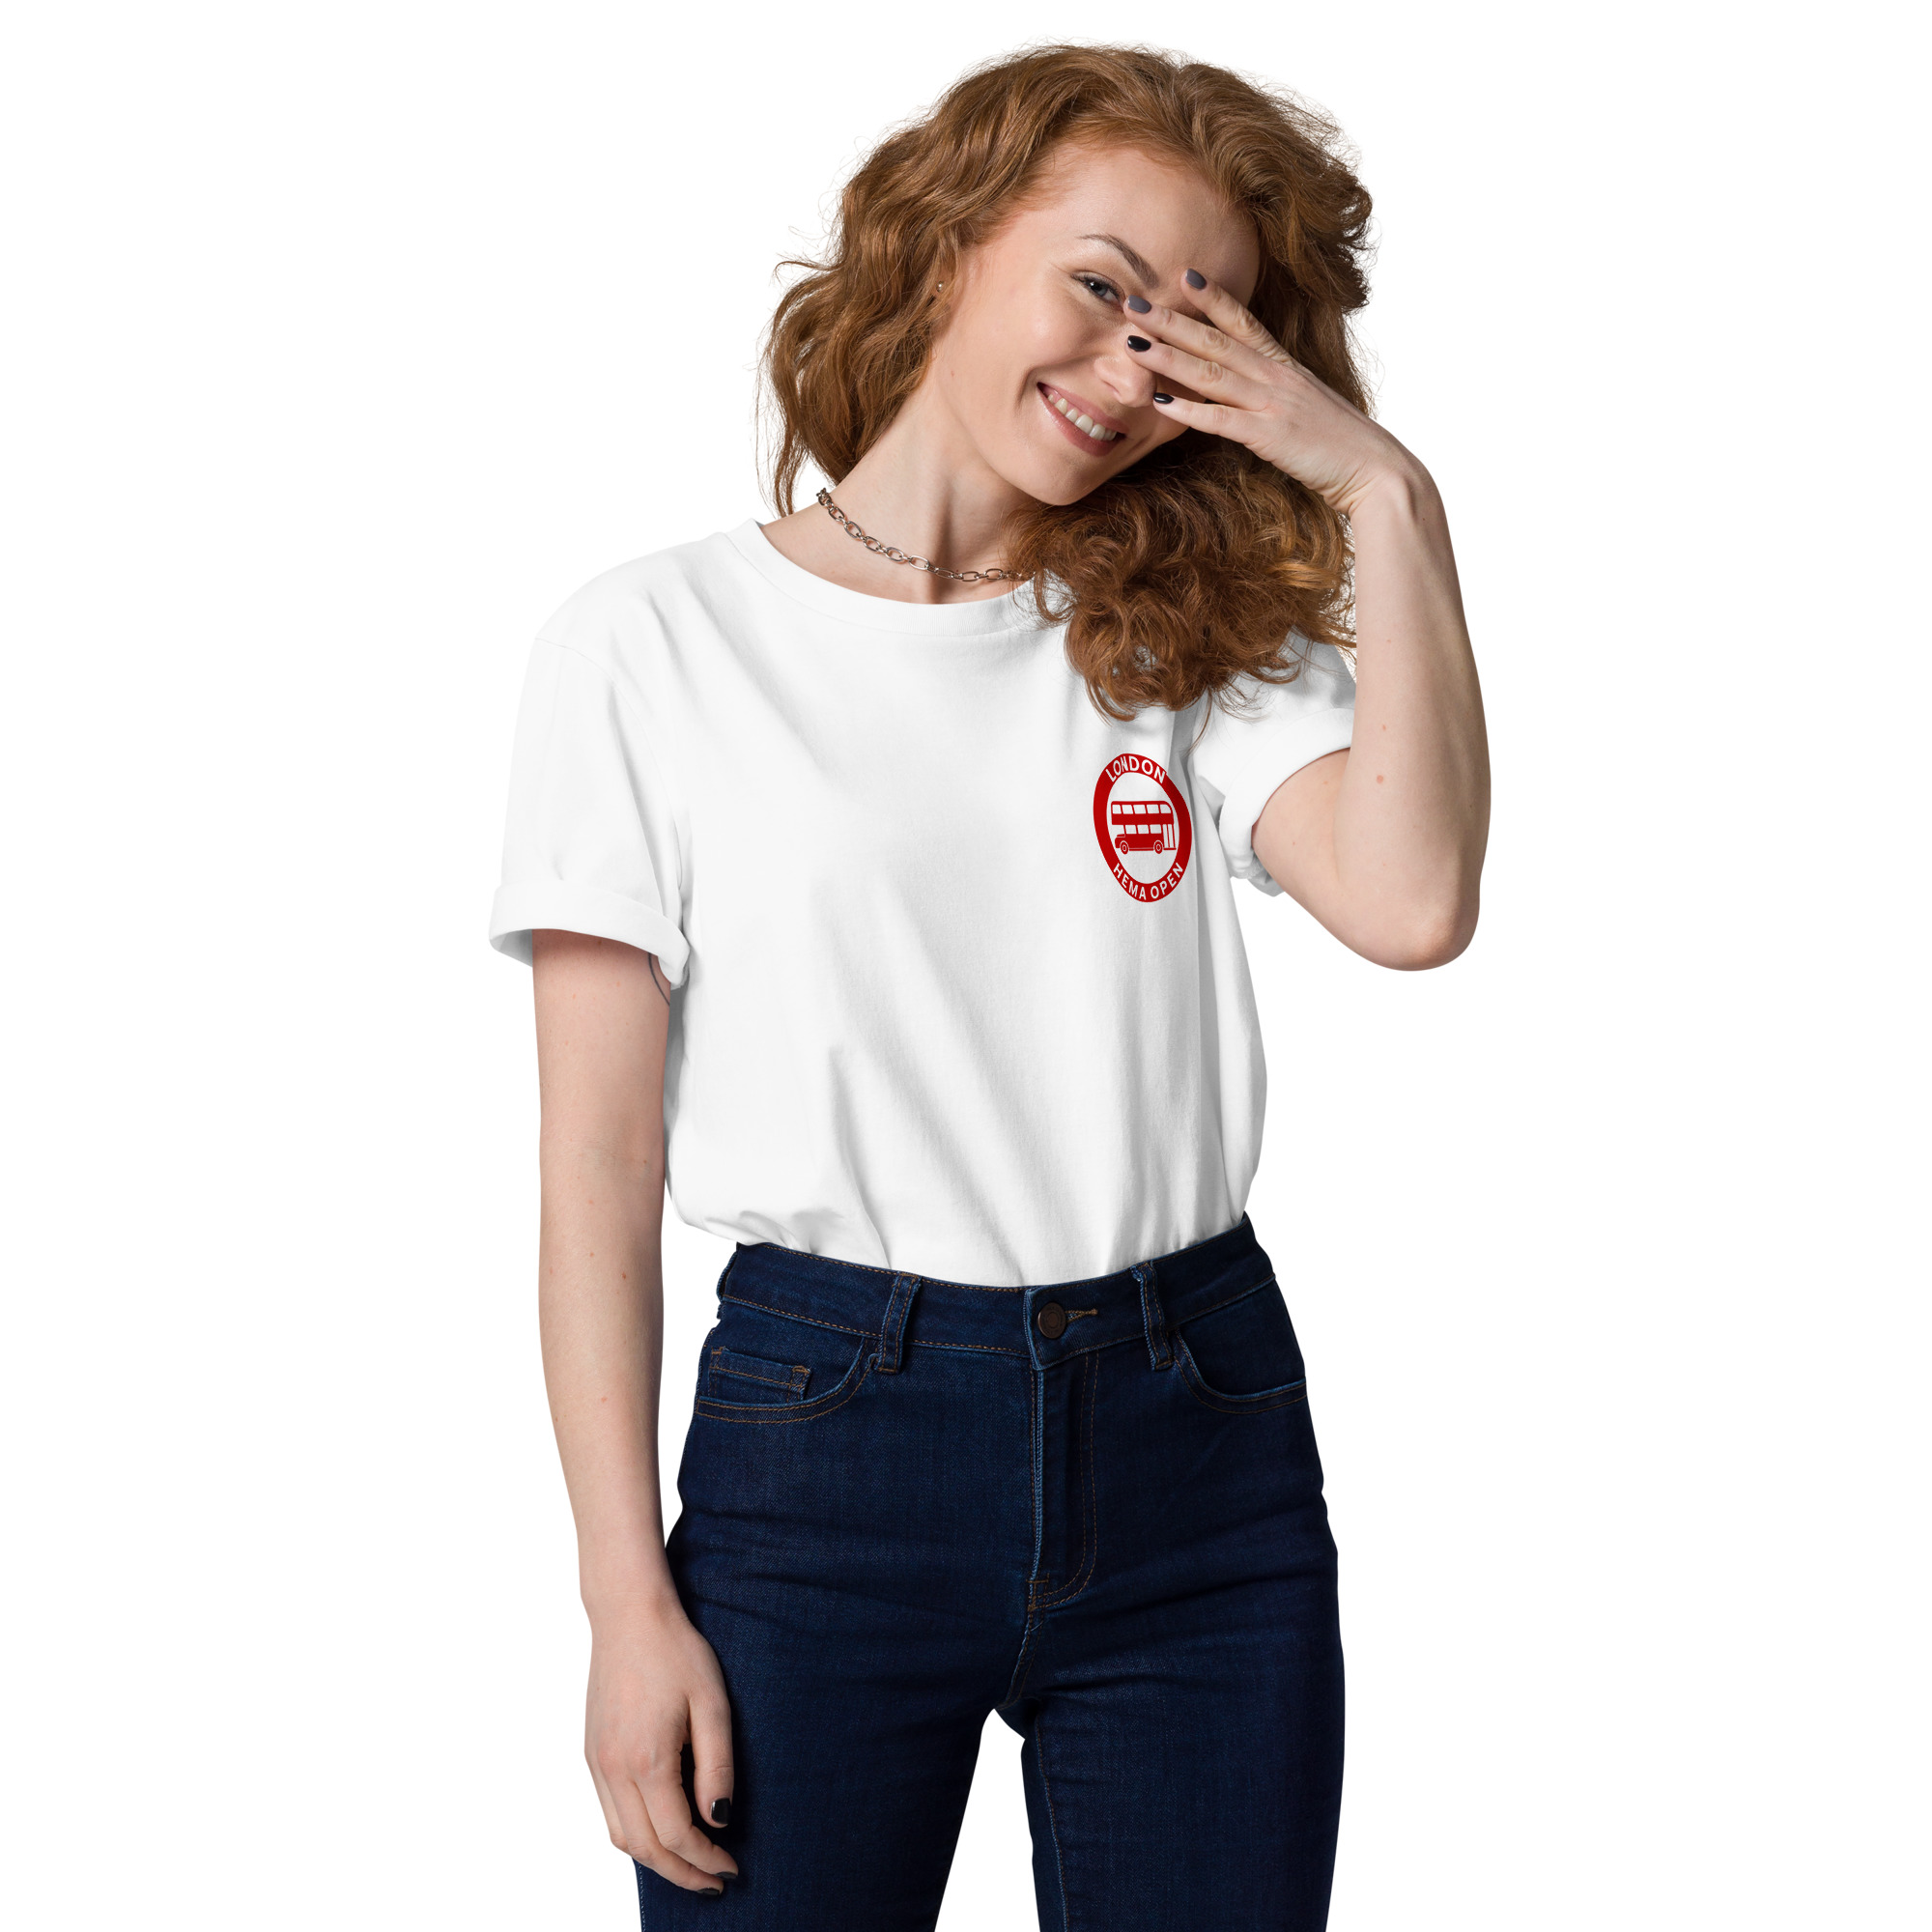 unisex-organic-cotton-t-shirt-white-front-65e344ddd9957.jpg